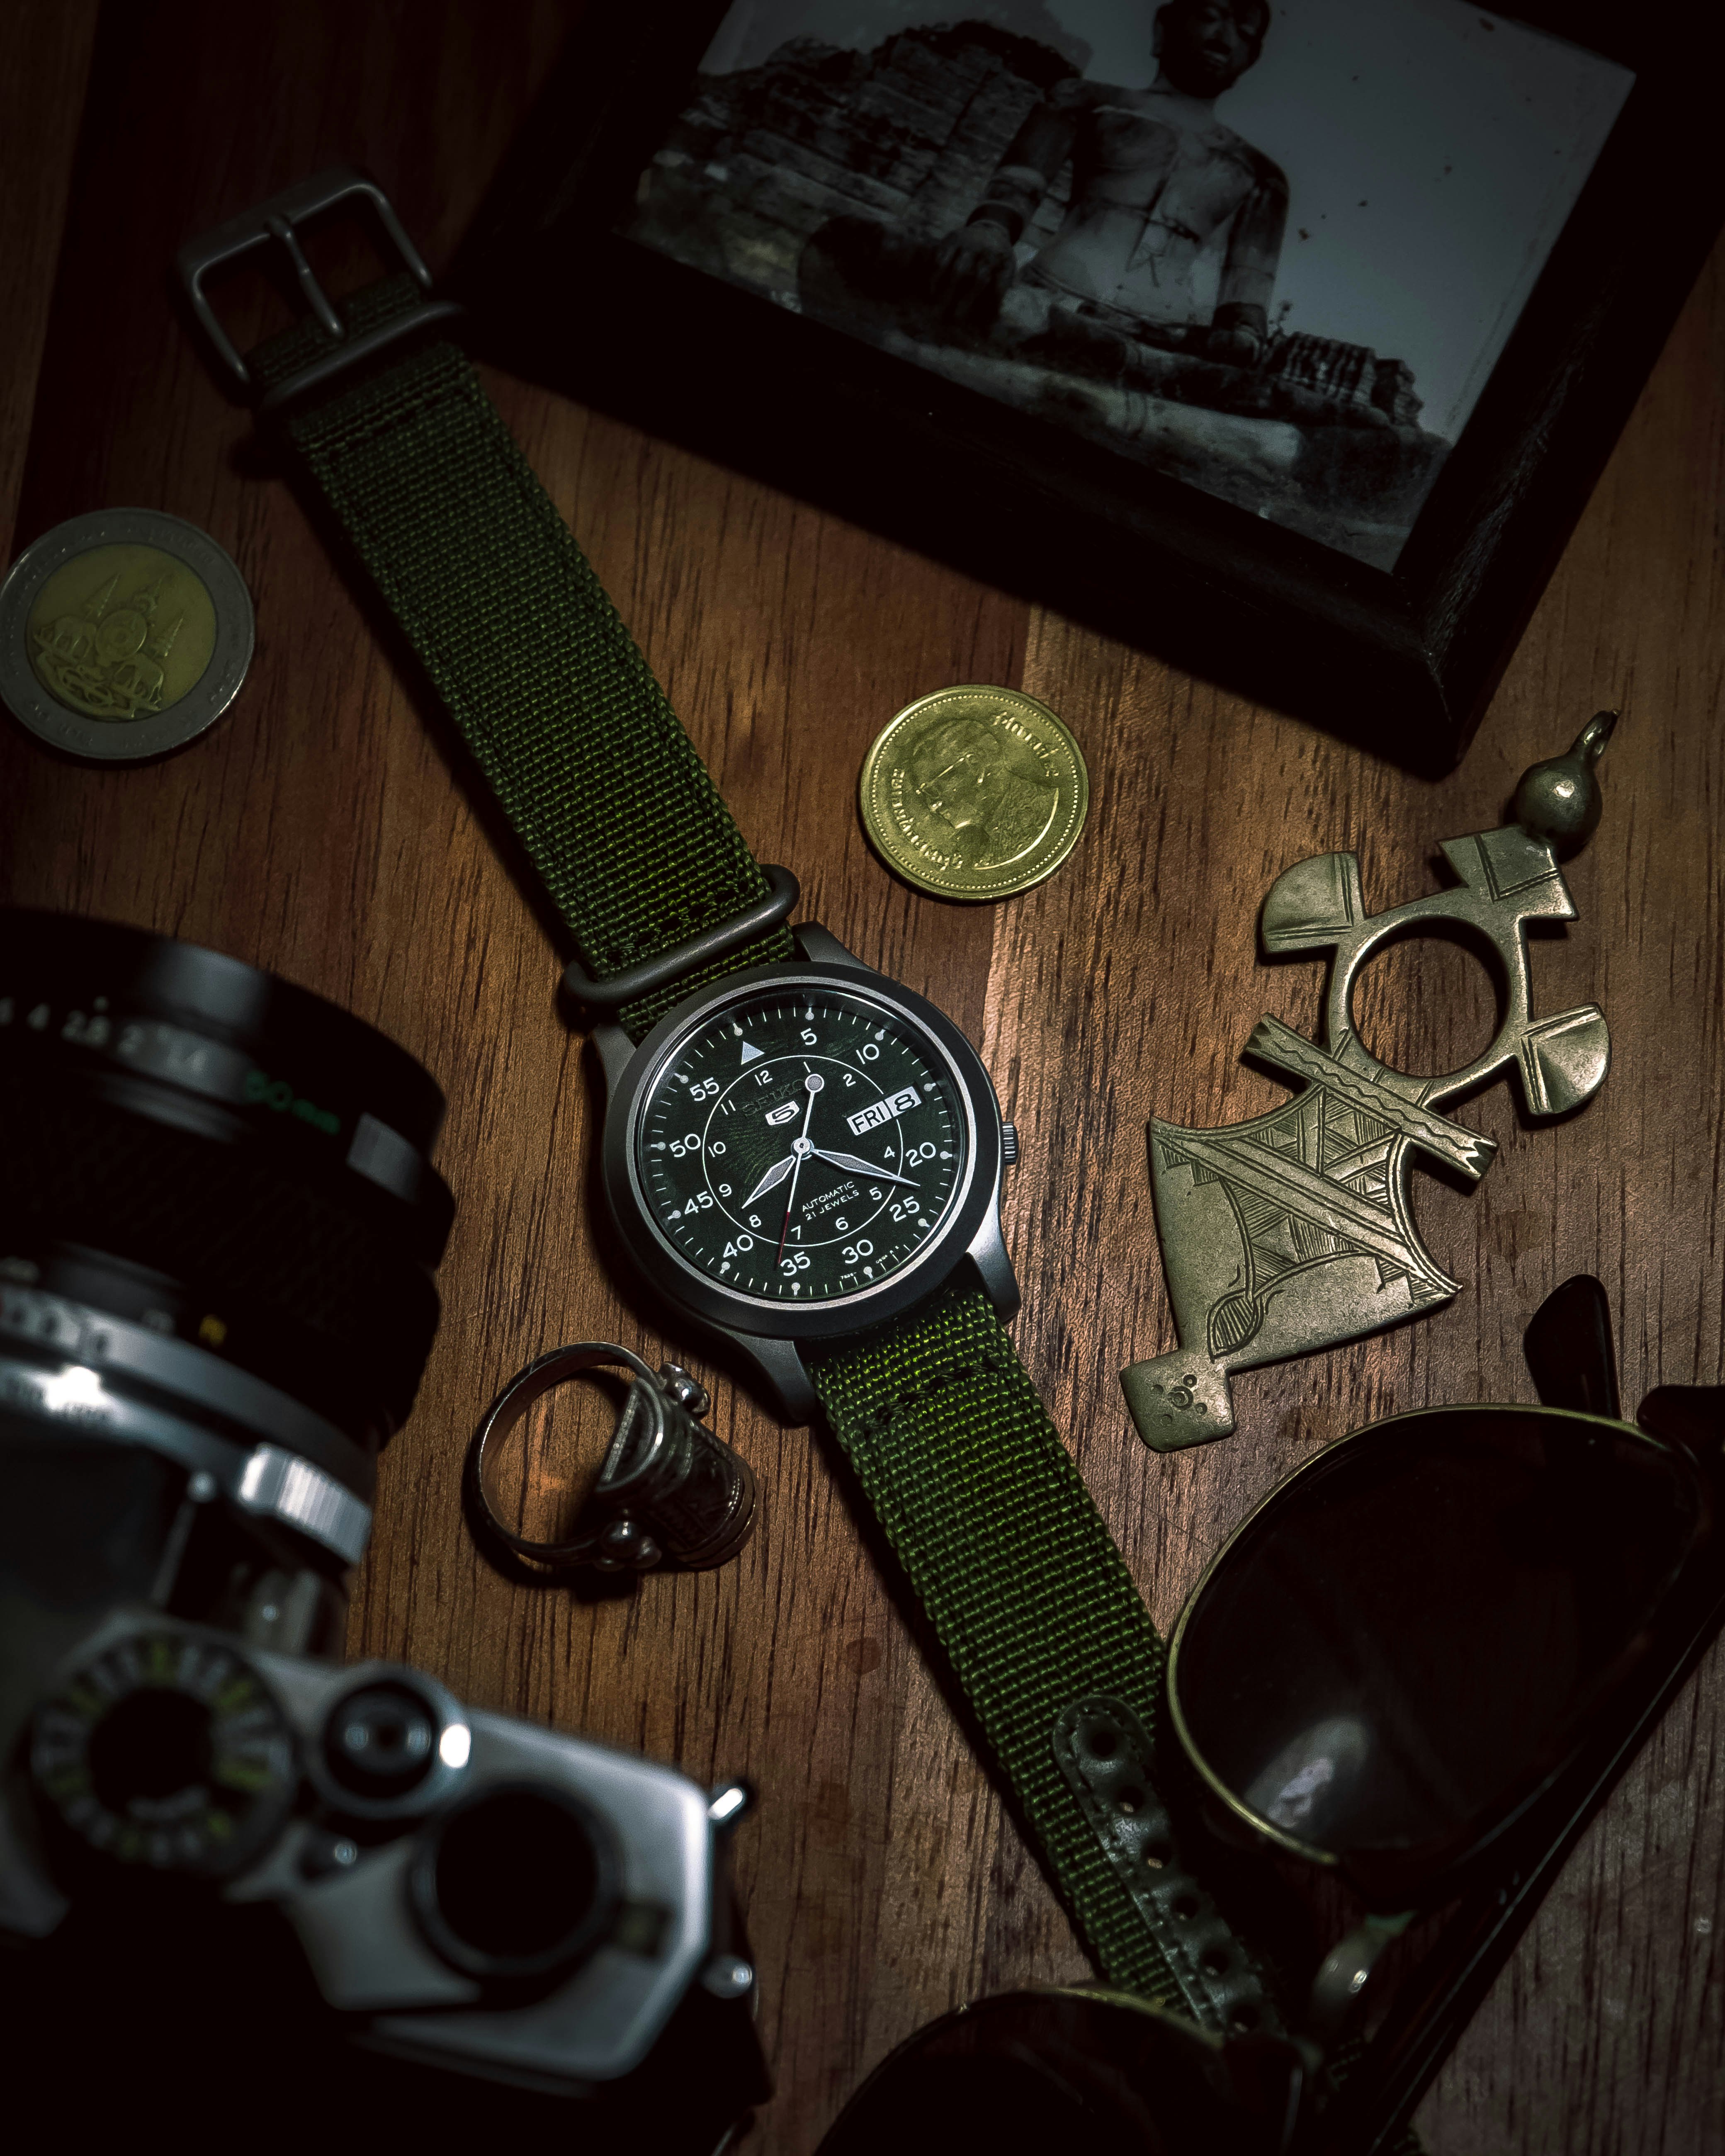 black round analog watch with black leather strap beside silver round analog watch